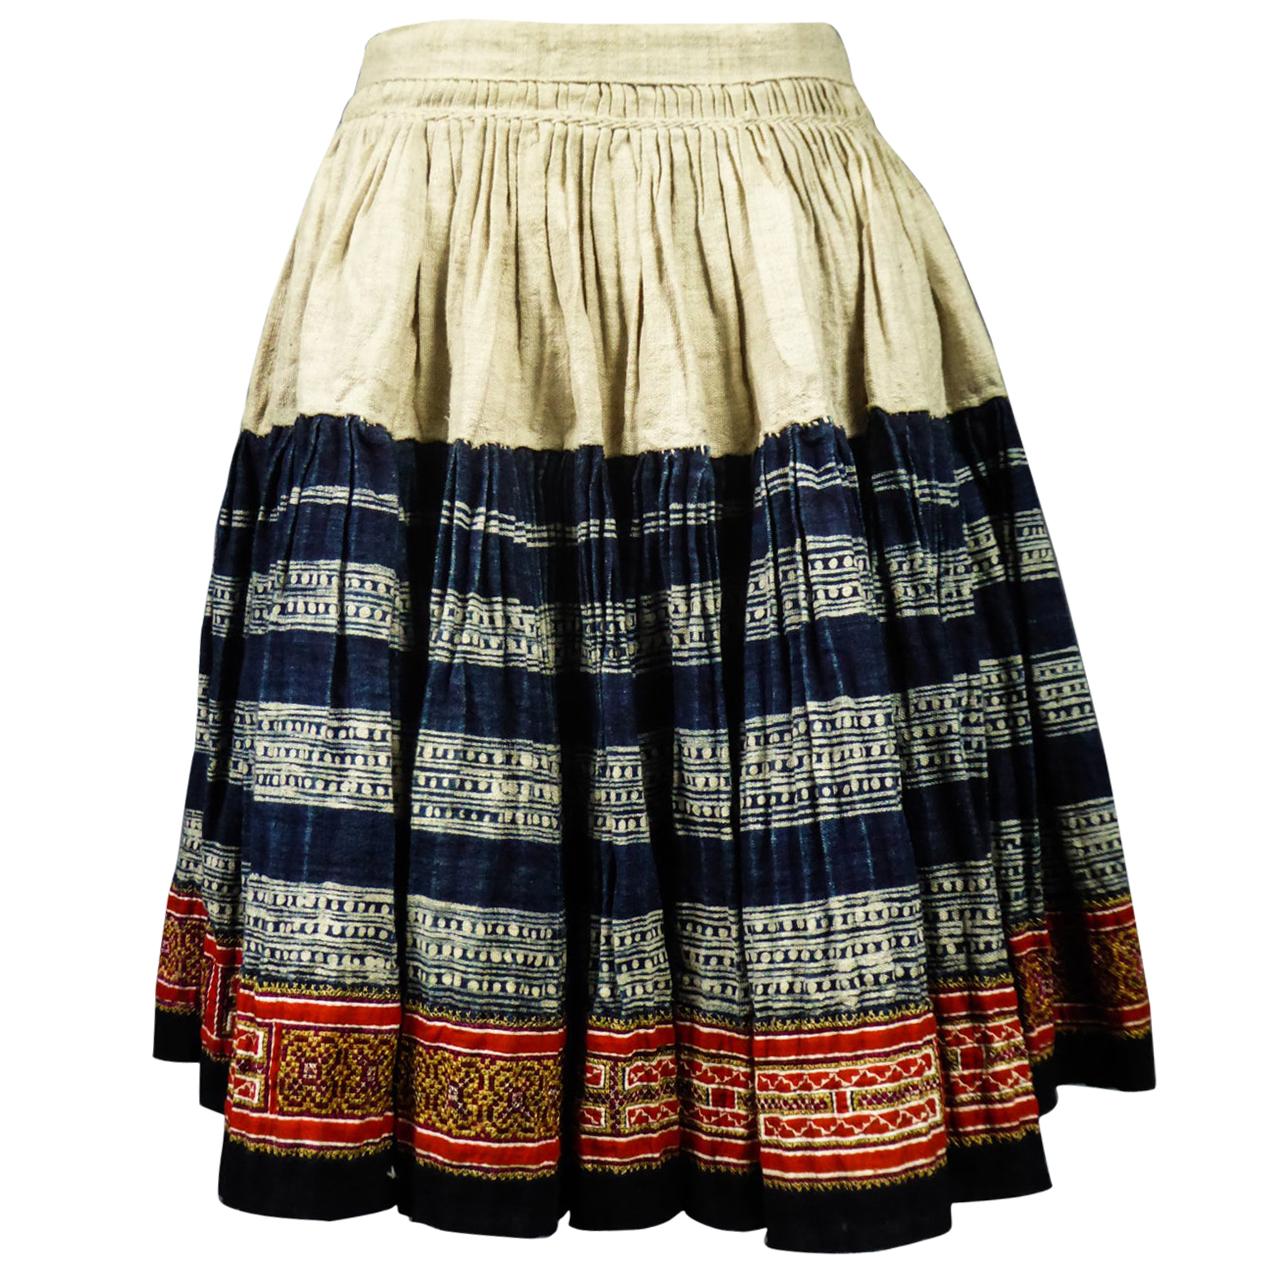 Miao - Hmong Pleated Skirt - Thailand Circa 1950